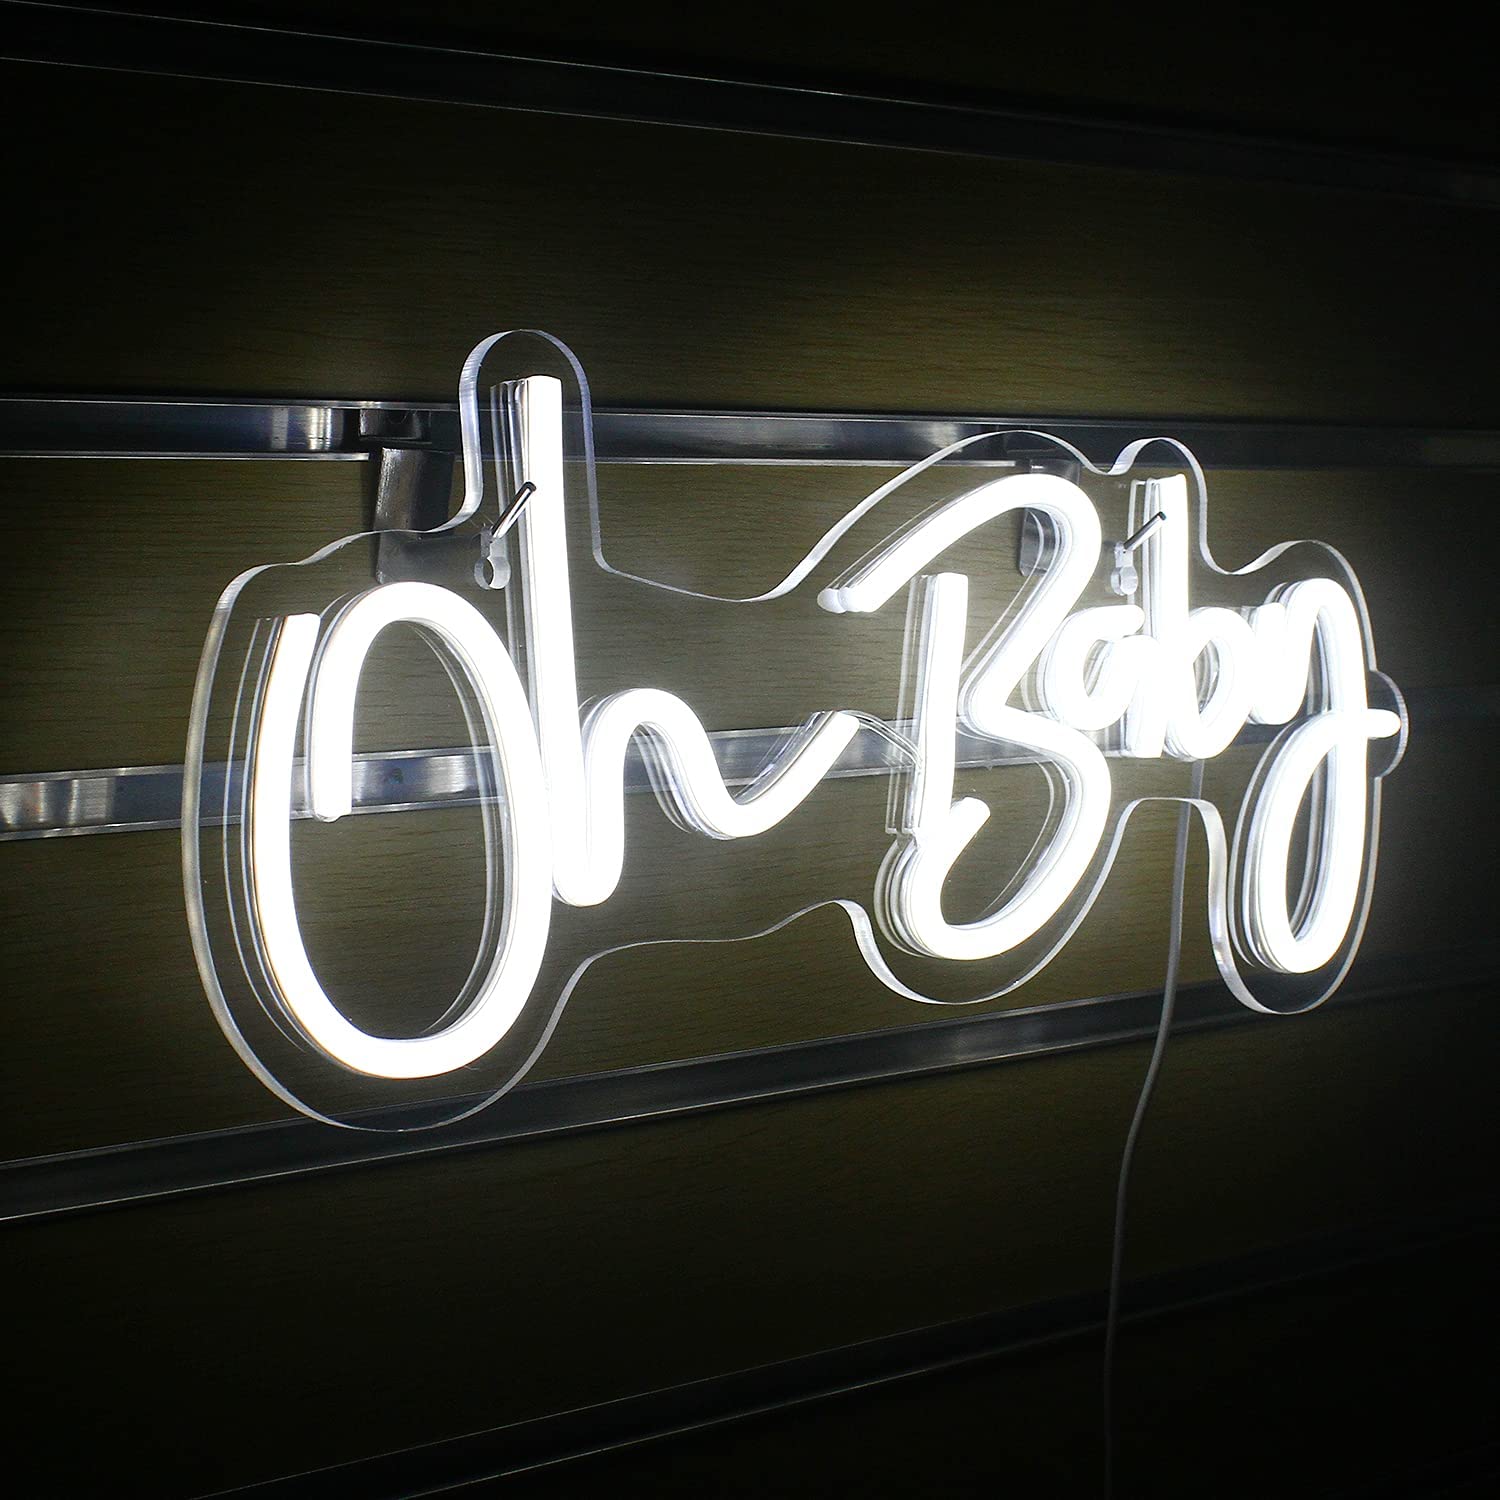 Neon "Oh Baby" Sign 42cm x 18cm